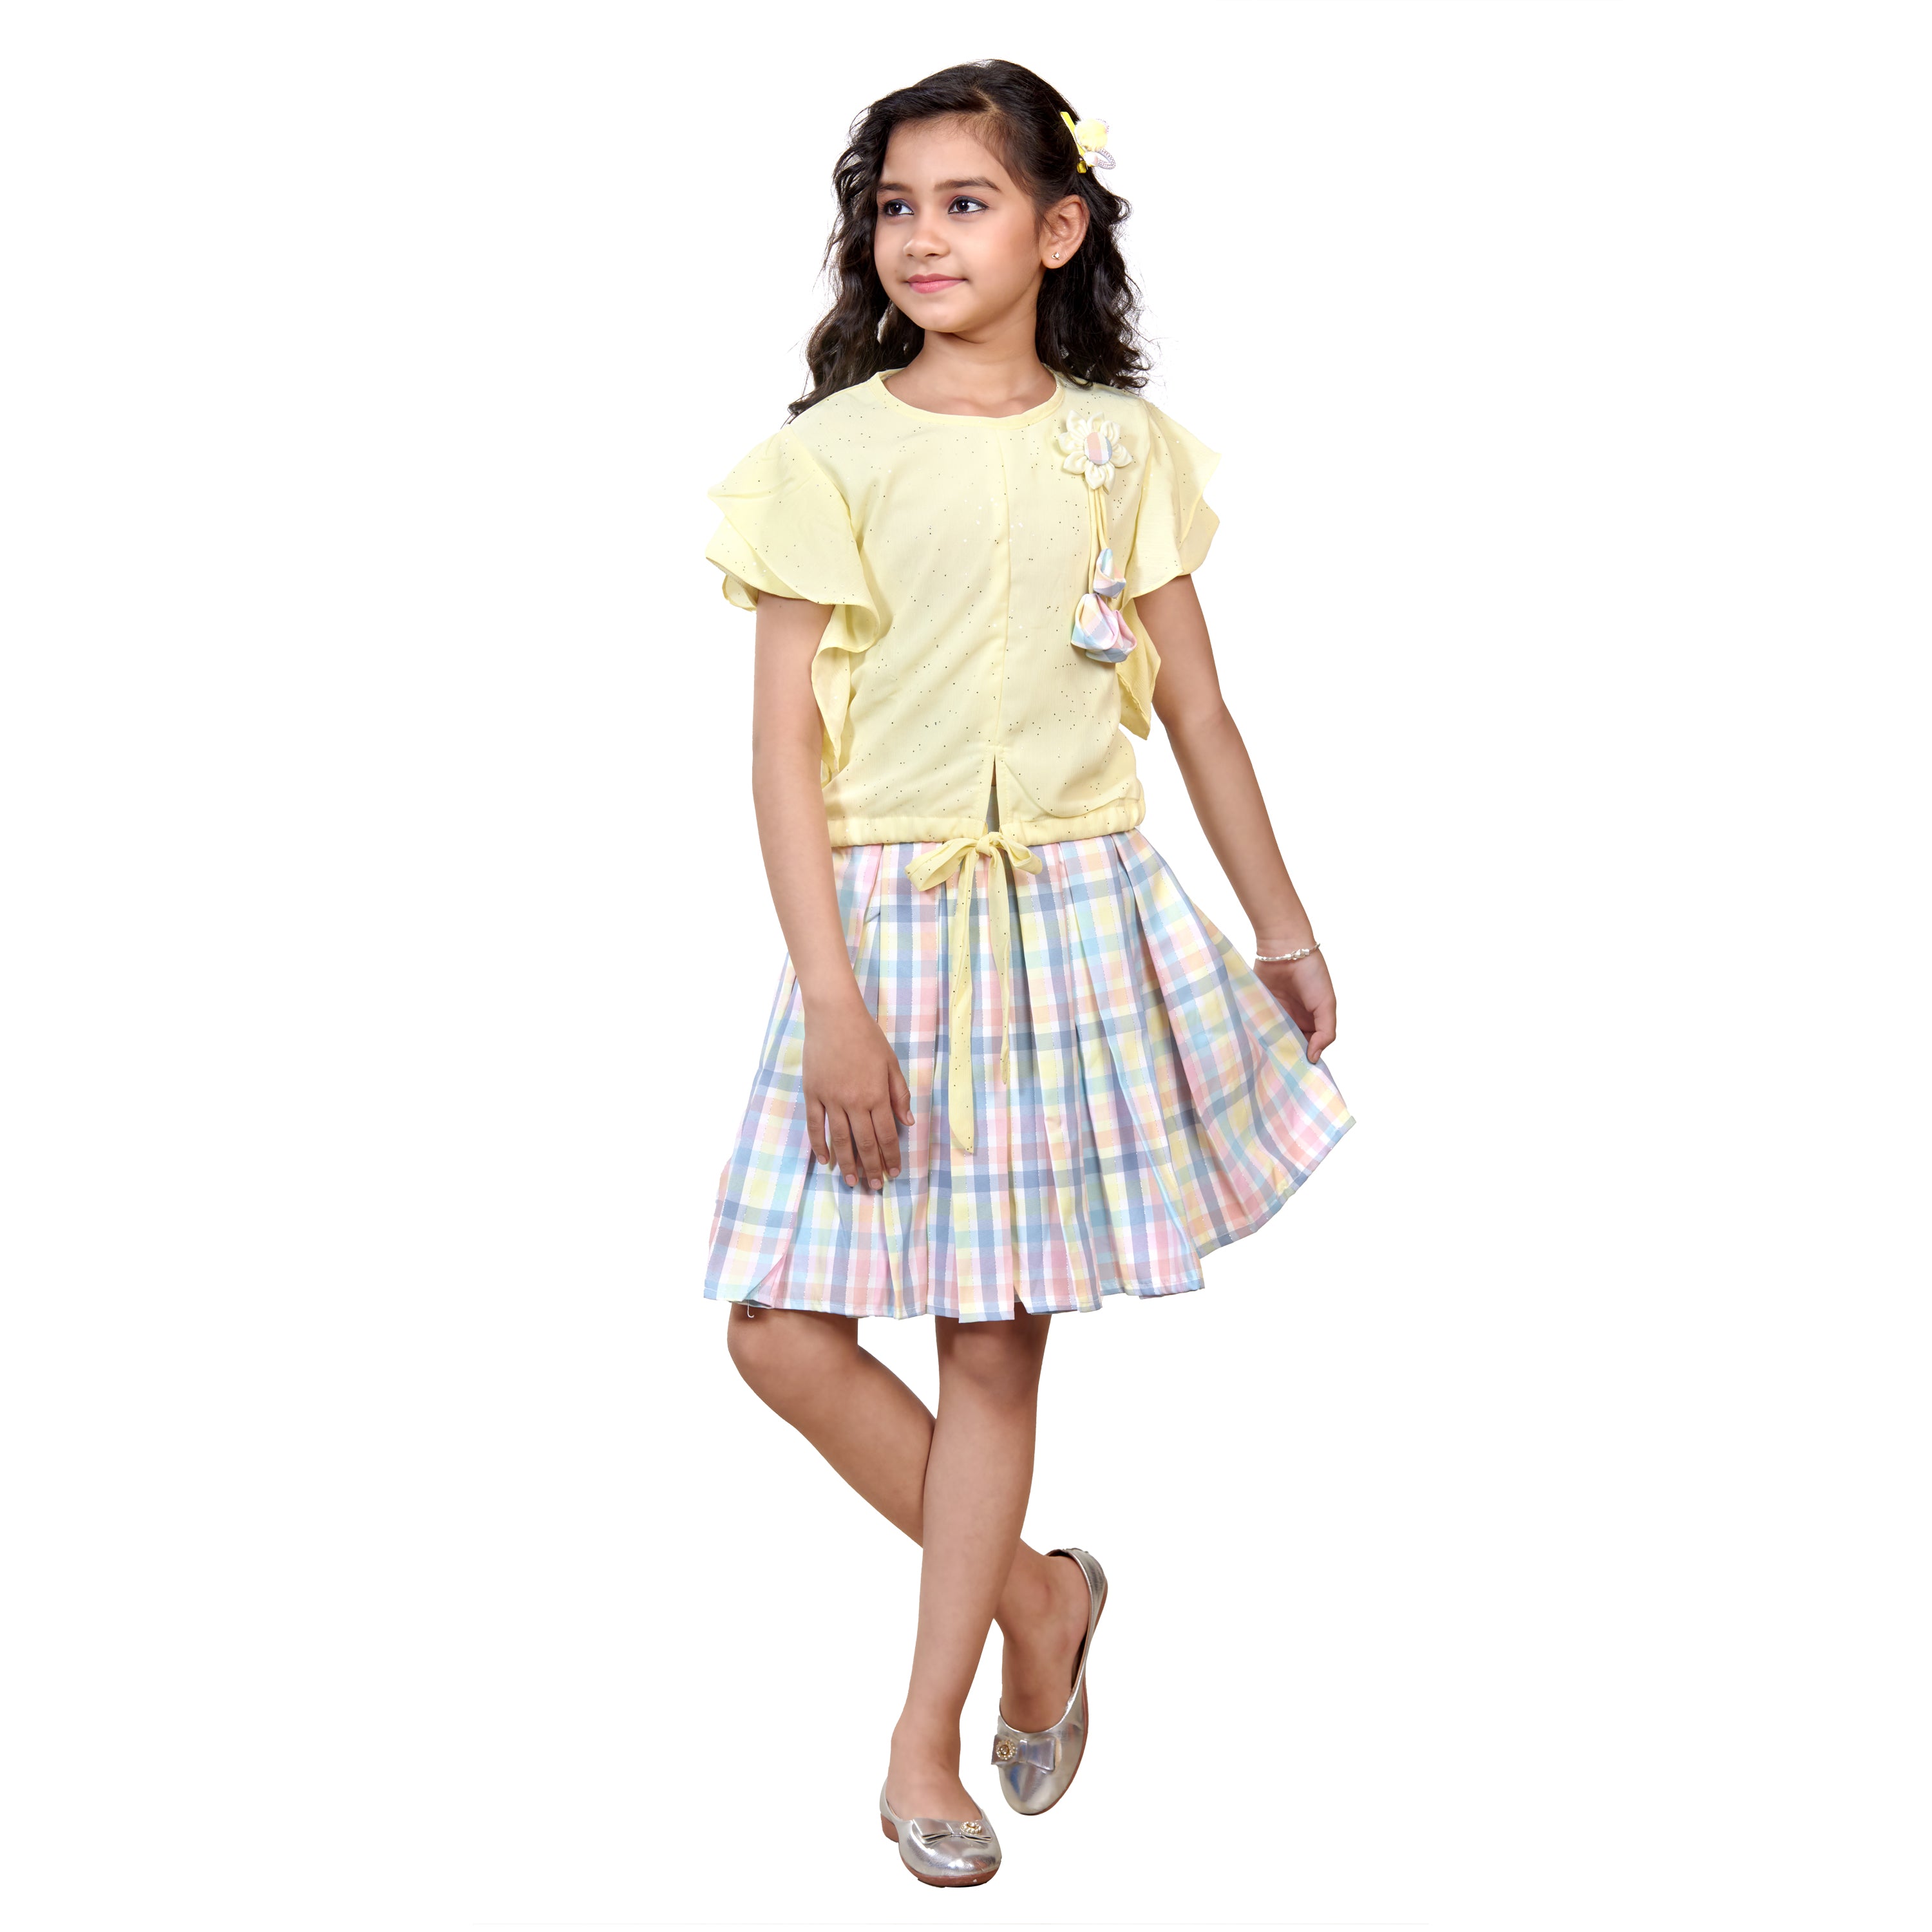 Fancy Top With Check Printed Skirt - Lemon